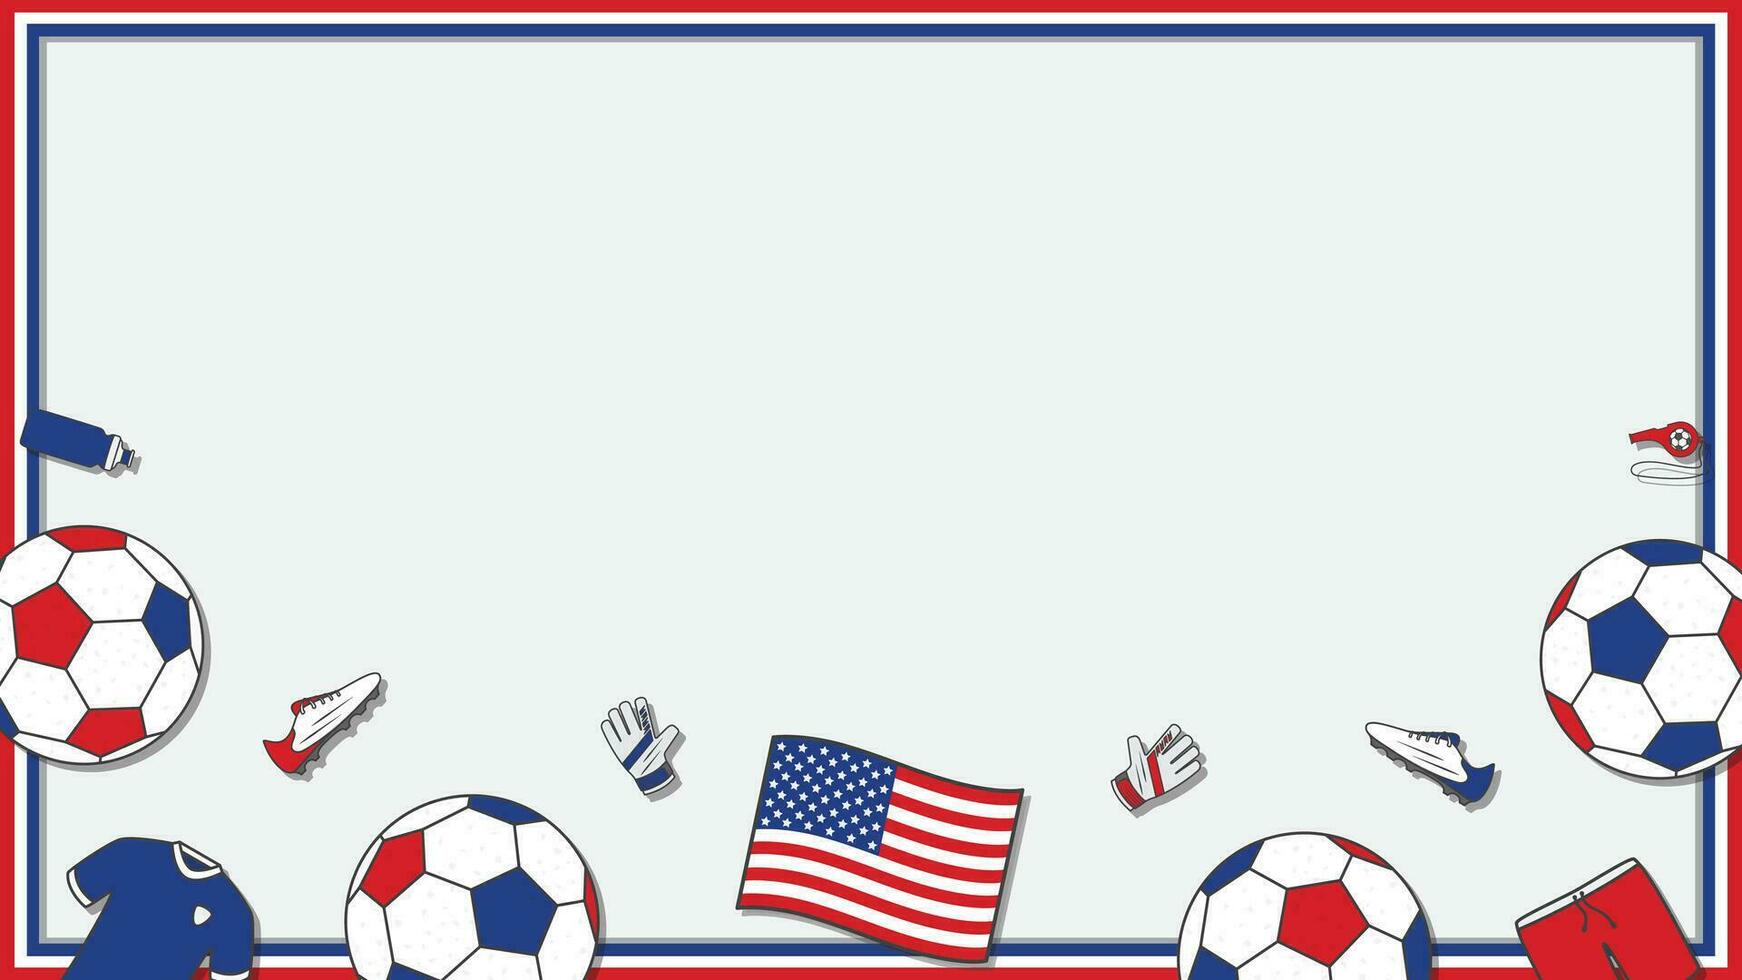 Football Background Design Template. Football Cartoon Vector Illustration. Soccer In United States